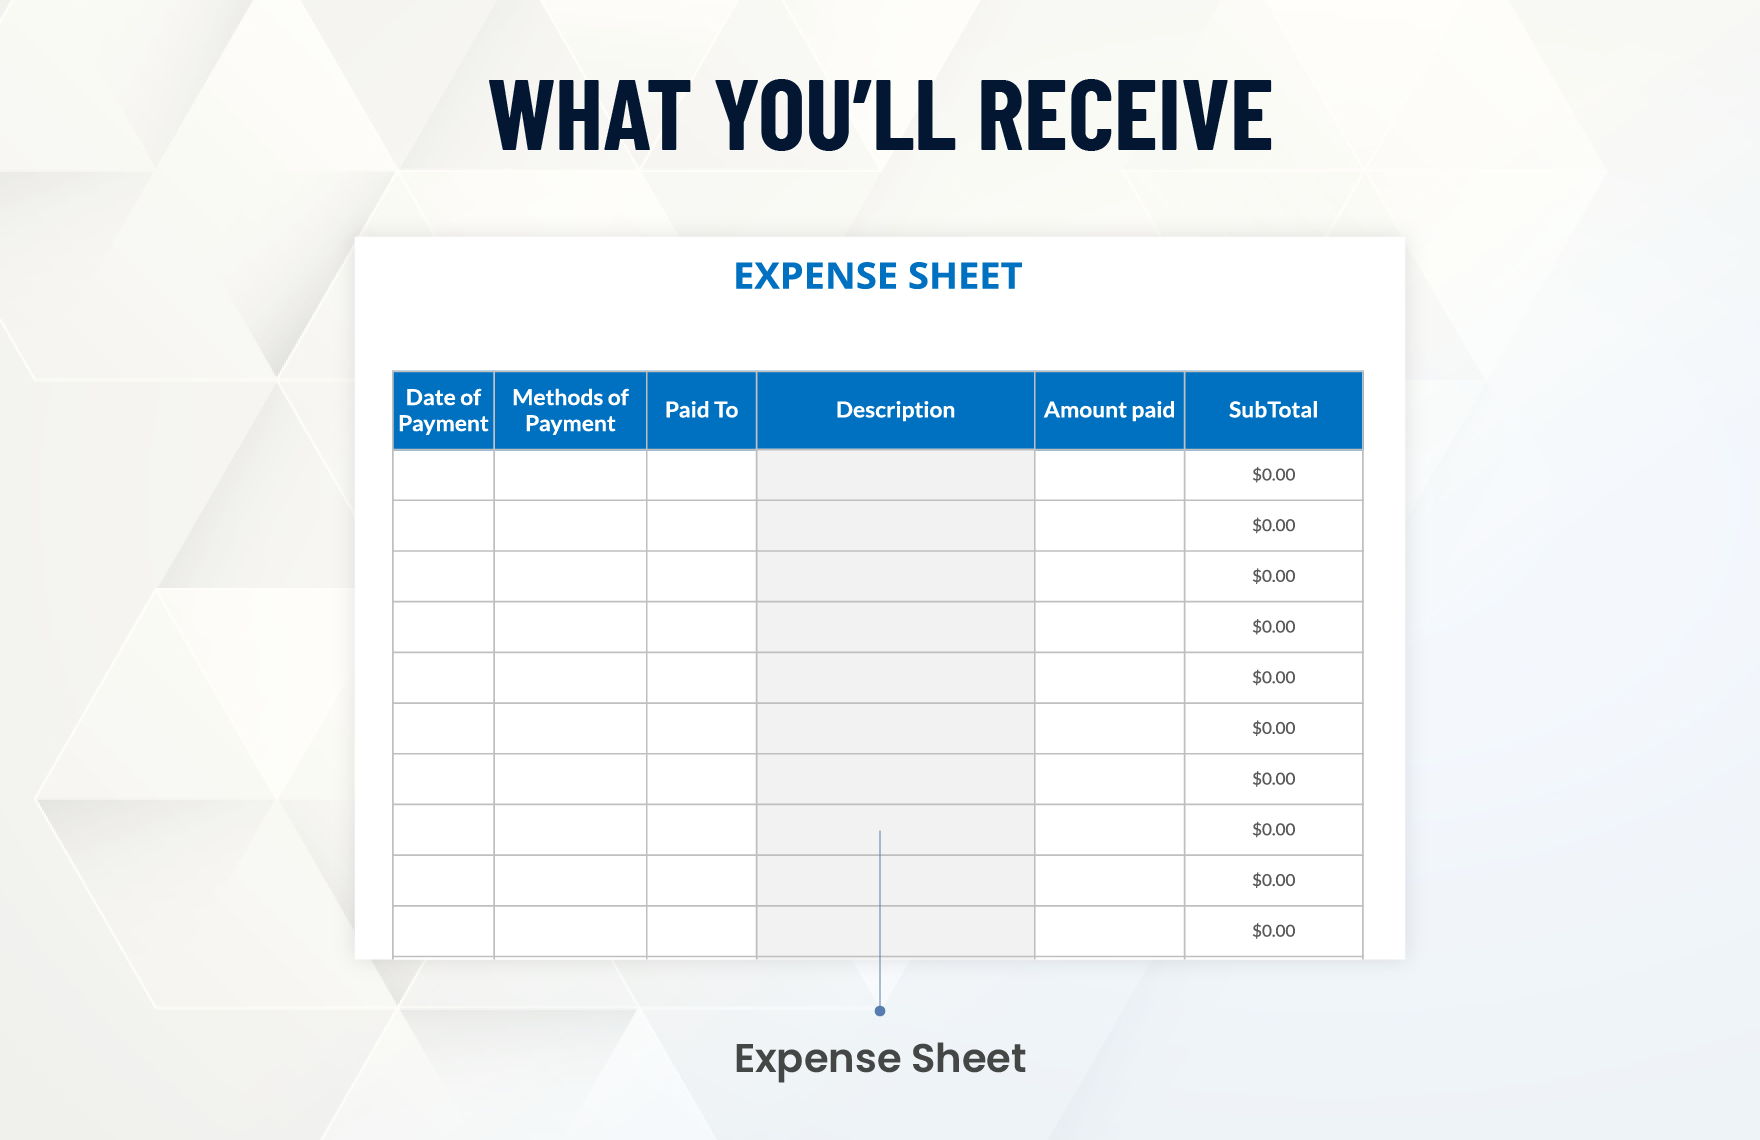 Sample Expense Sheet Template